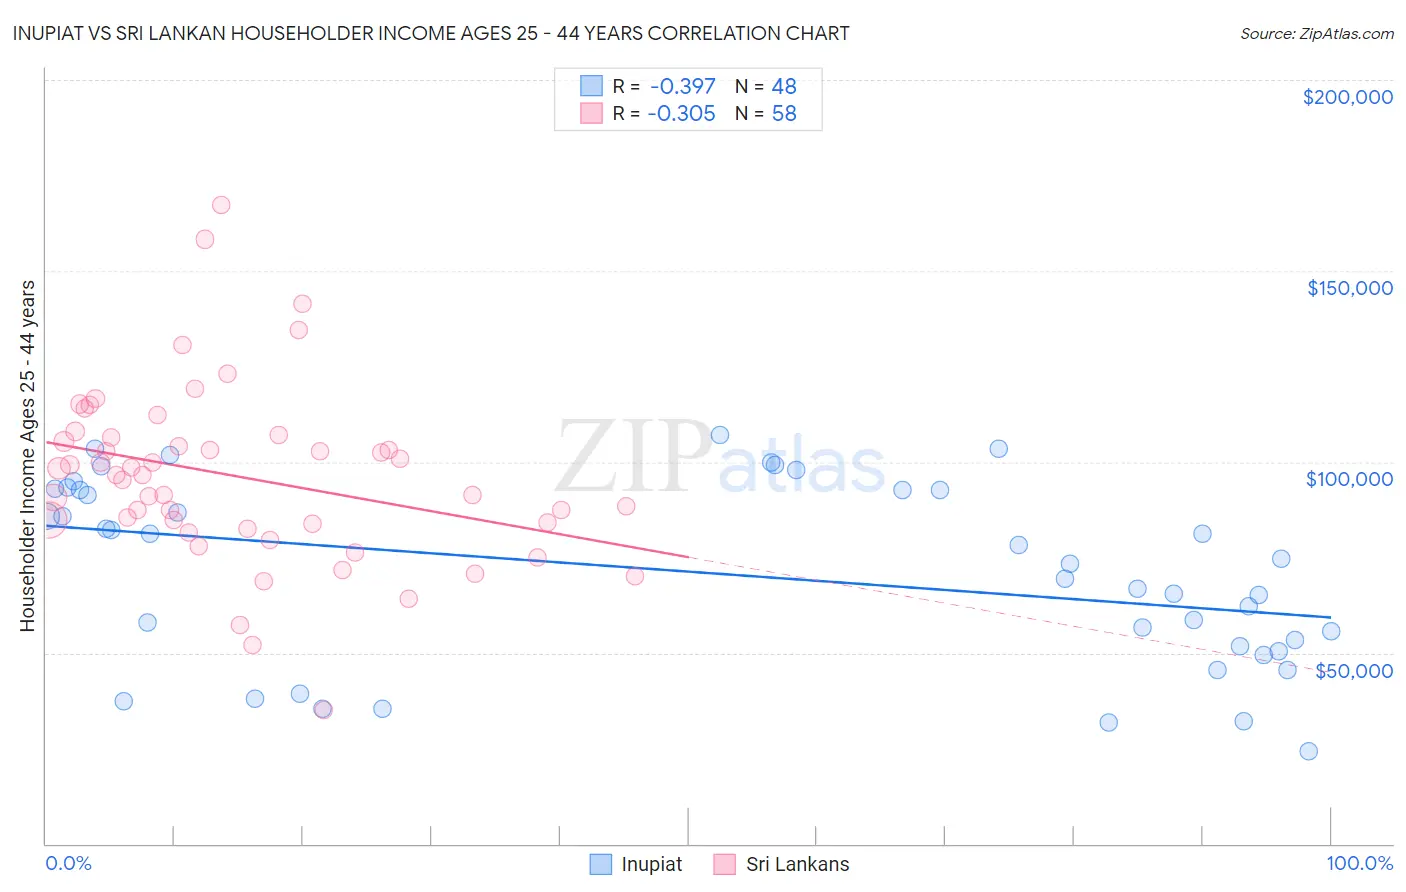 Inupiat vs Sri Lankan Householder Income Ages 25 - 44 years